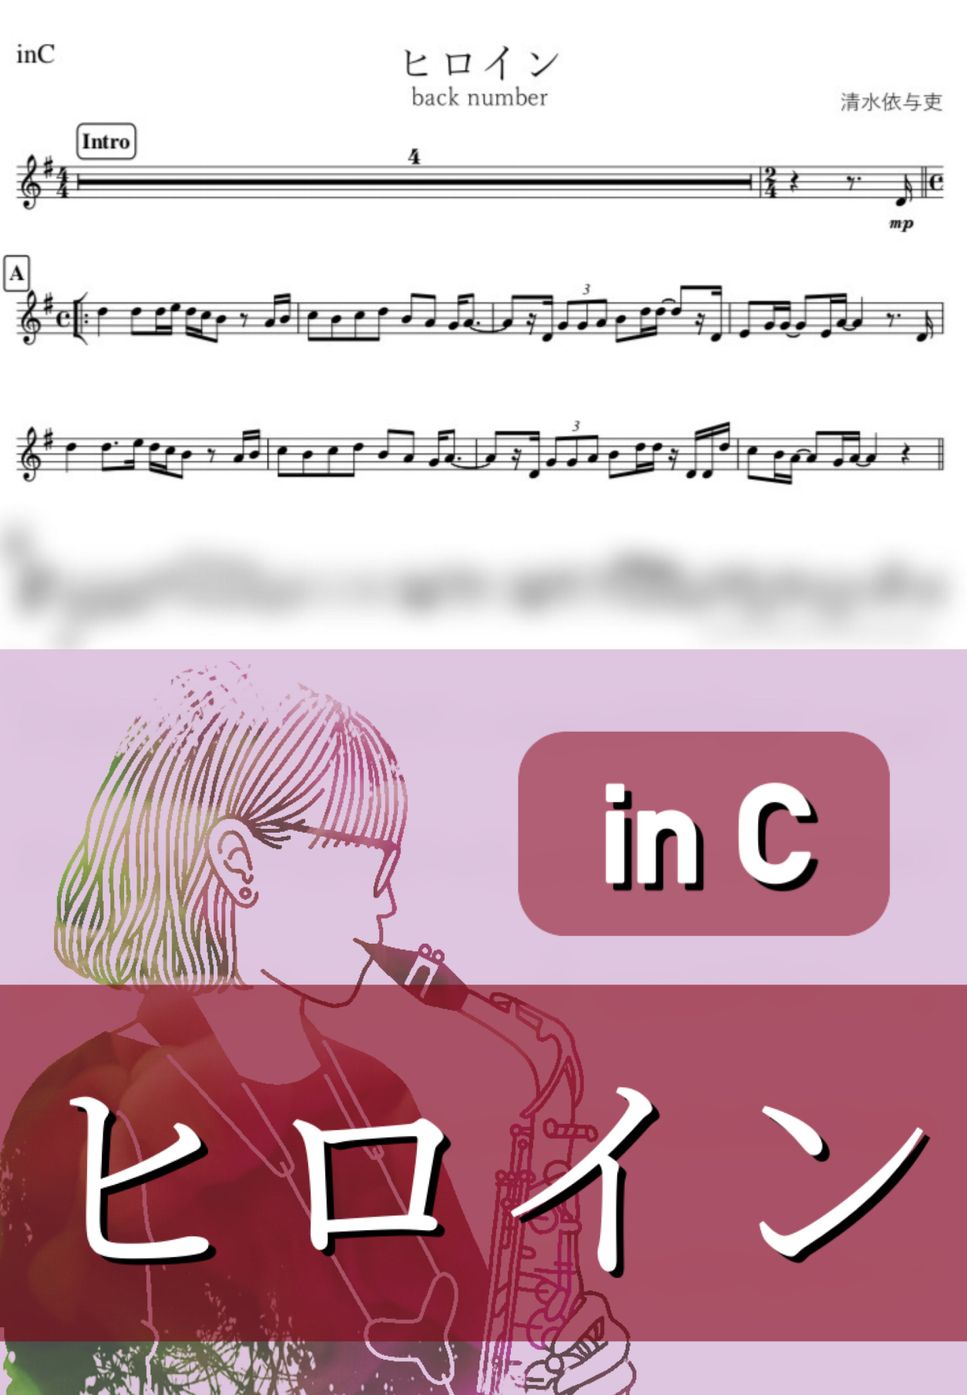 back number - ヒロイン (C) by kanamusic